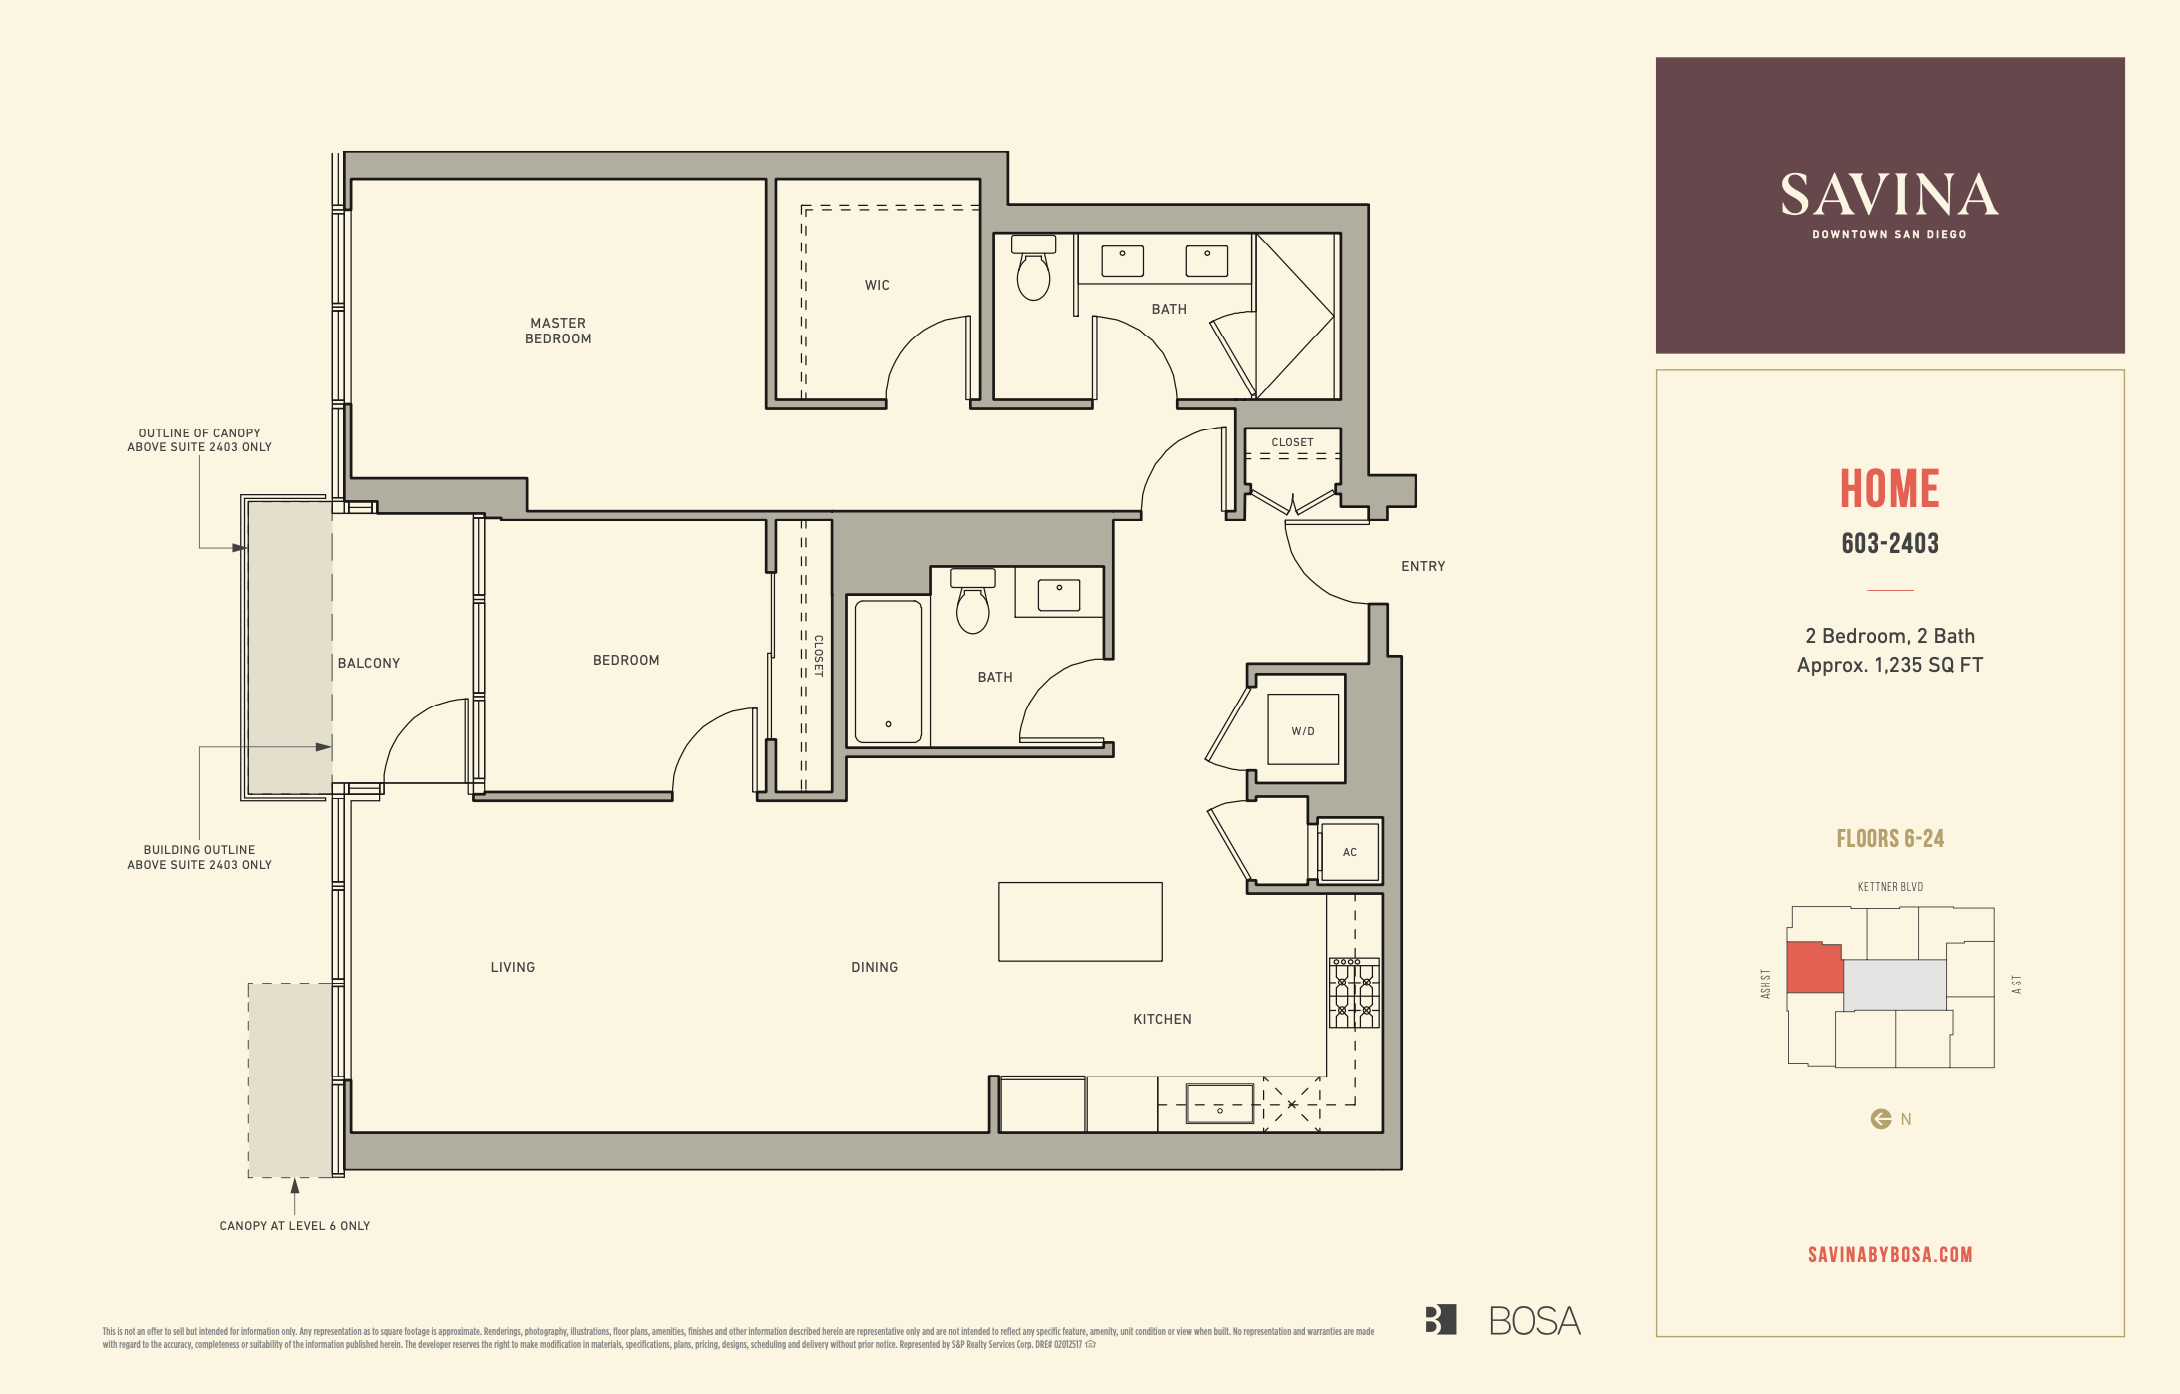 Savina residence 603 thru 2403 floor plan